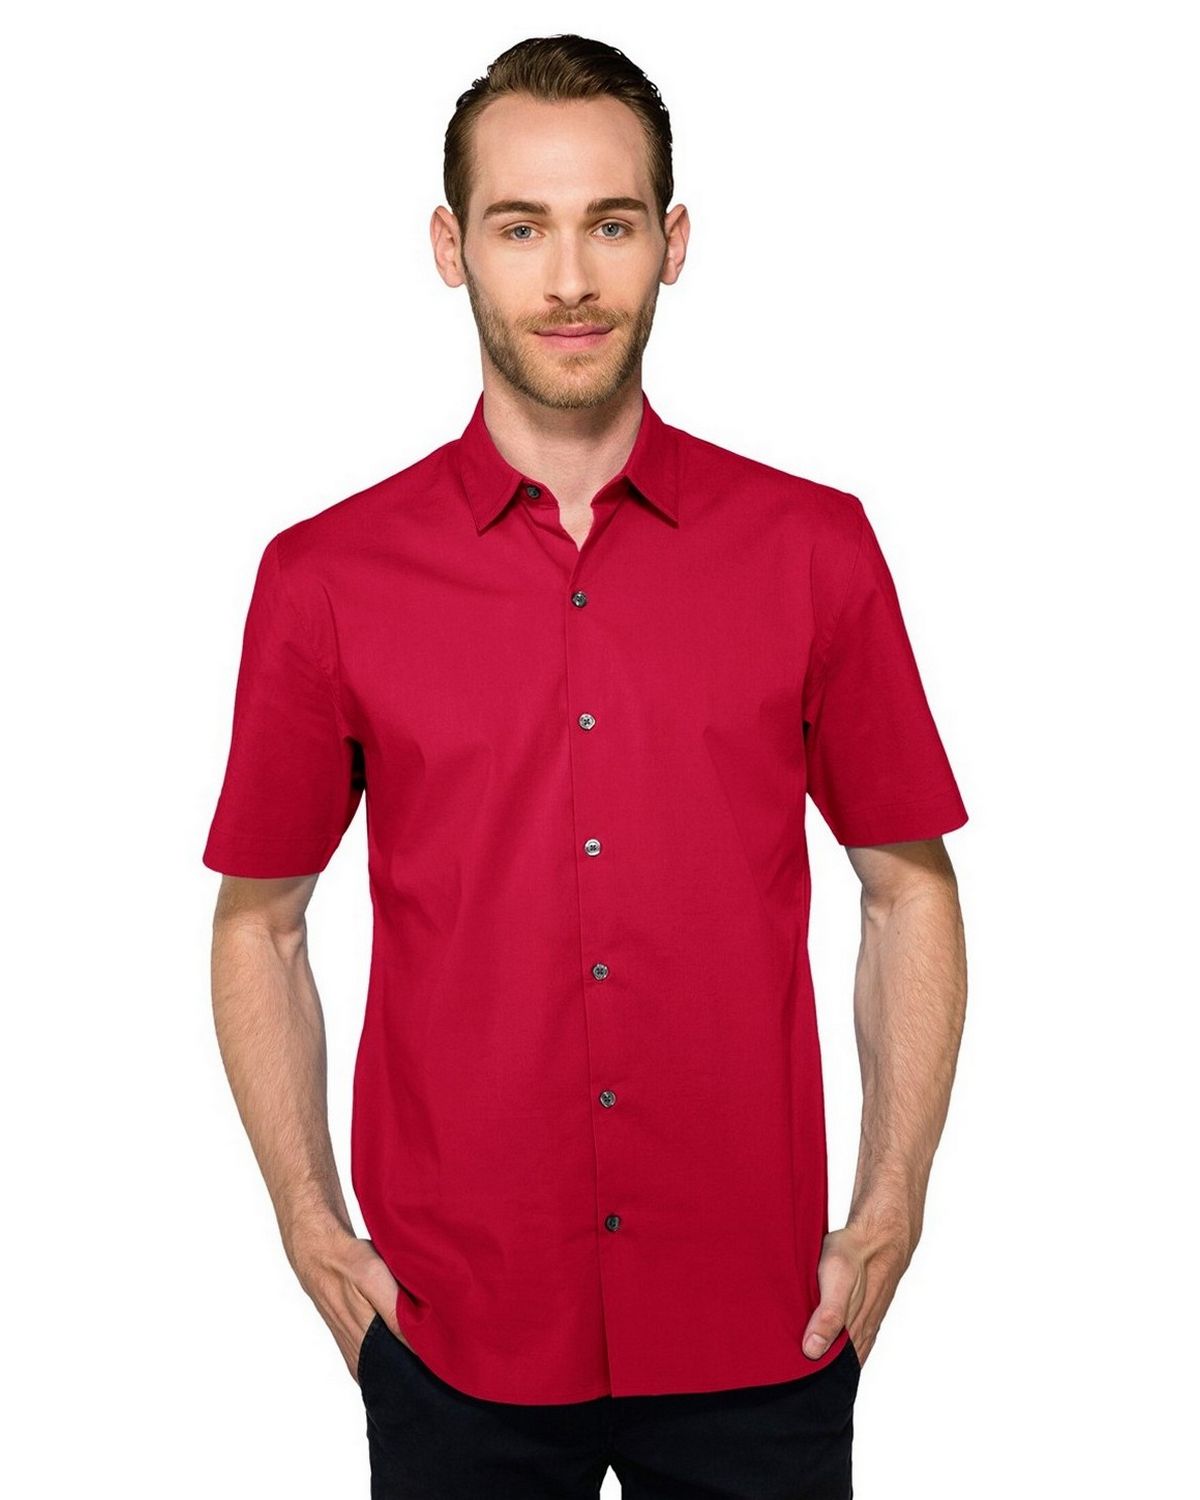 858 Tri Mountain 5 oz Wrinkle-Resistant Rayon/Poly Woven Shirt 